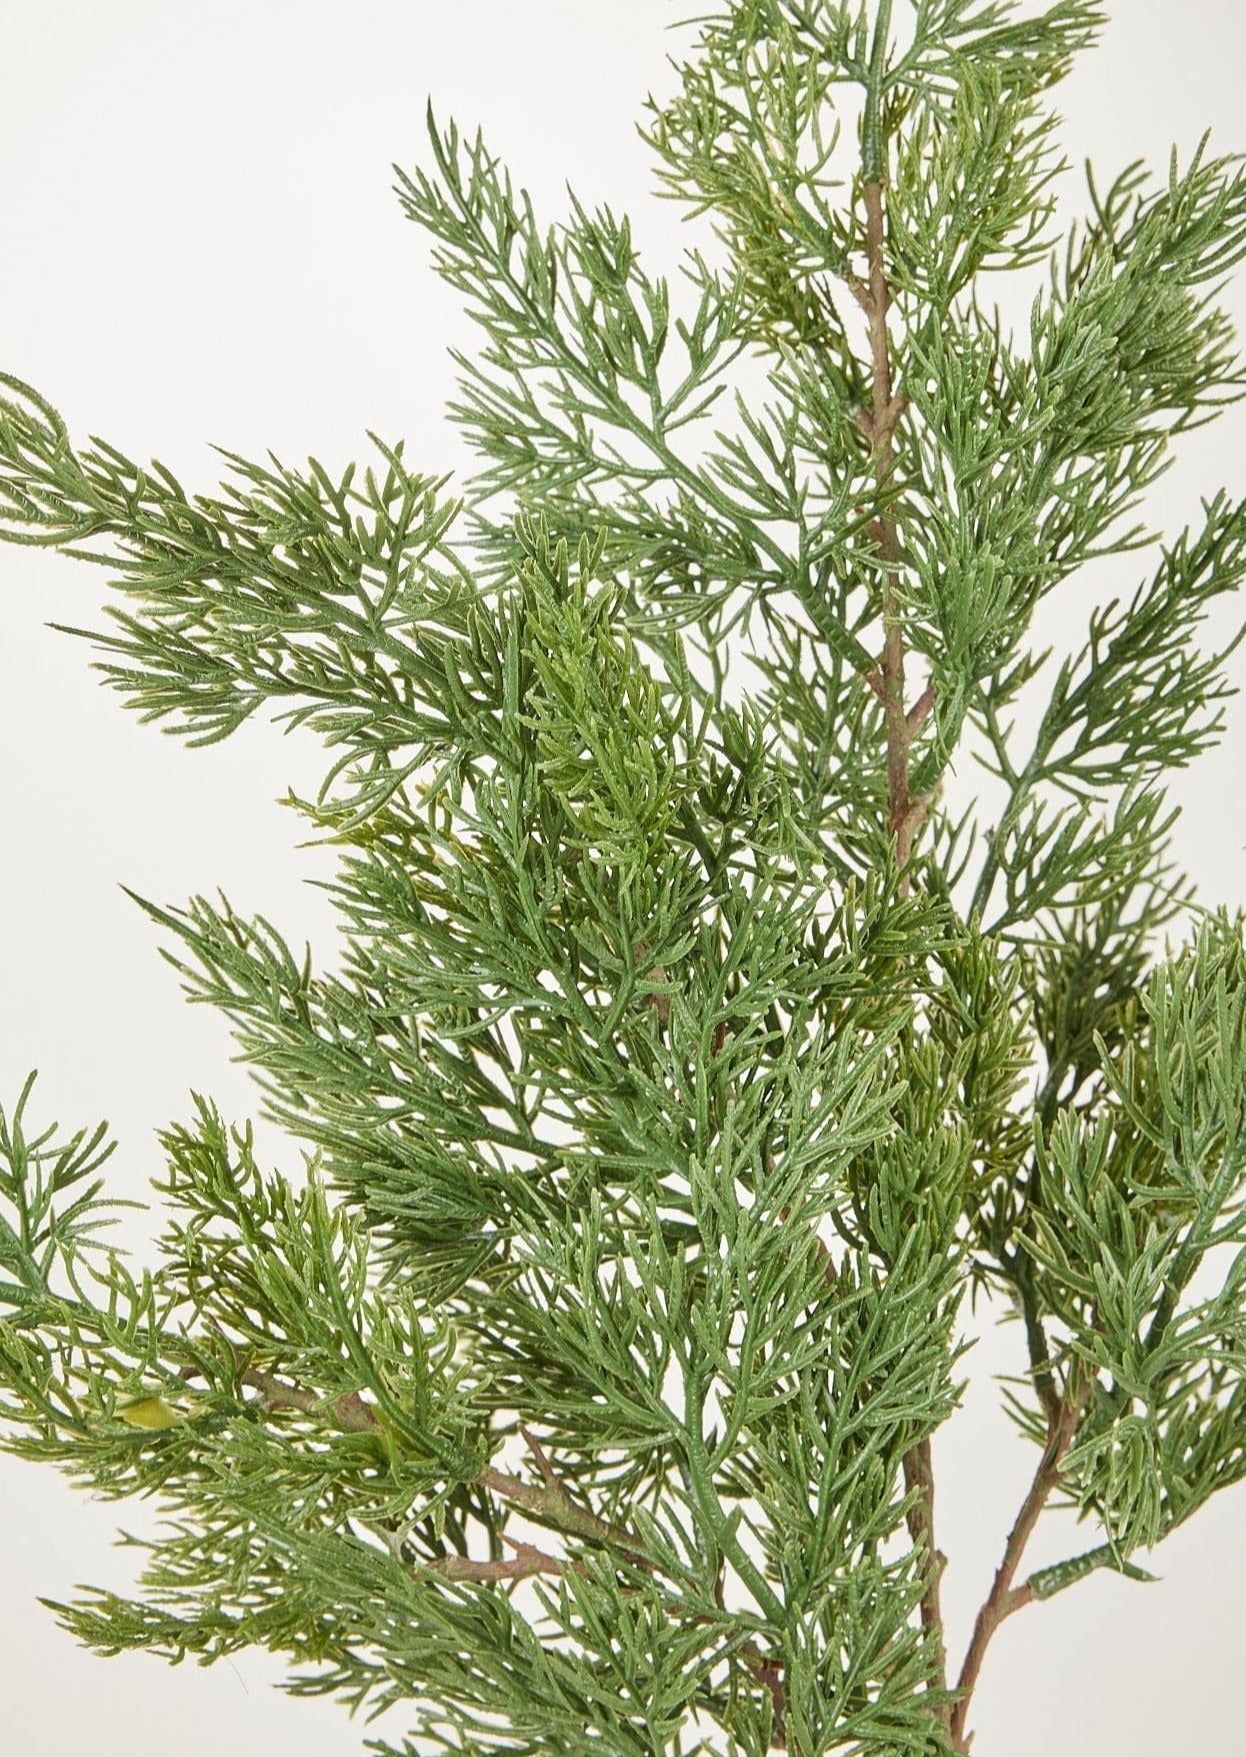 Afloral Closeup View of Artificial Green Cedar Foliage